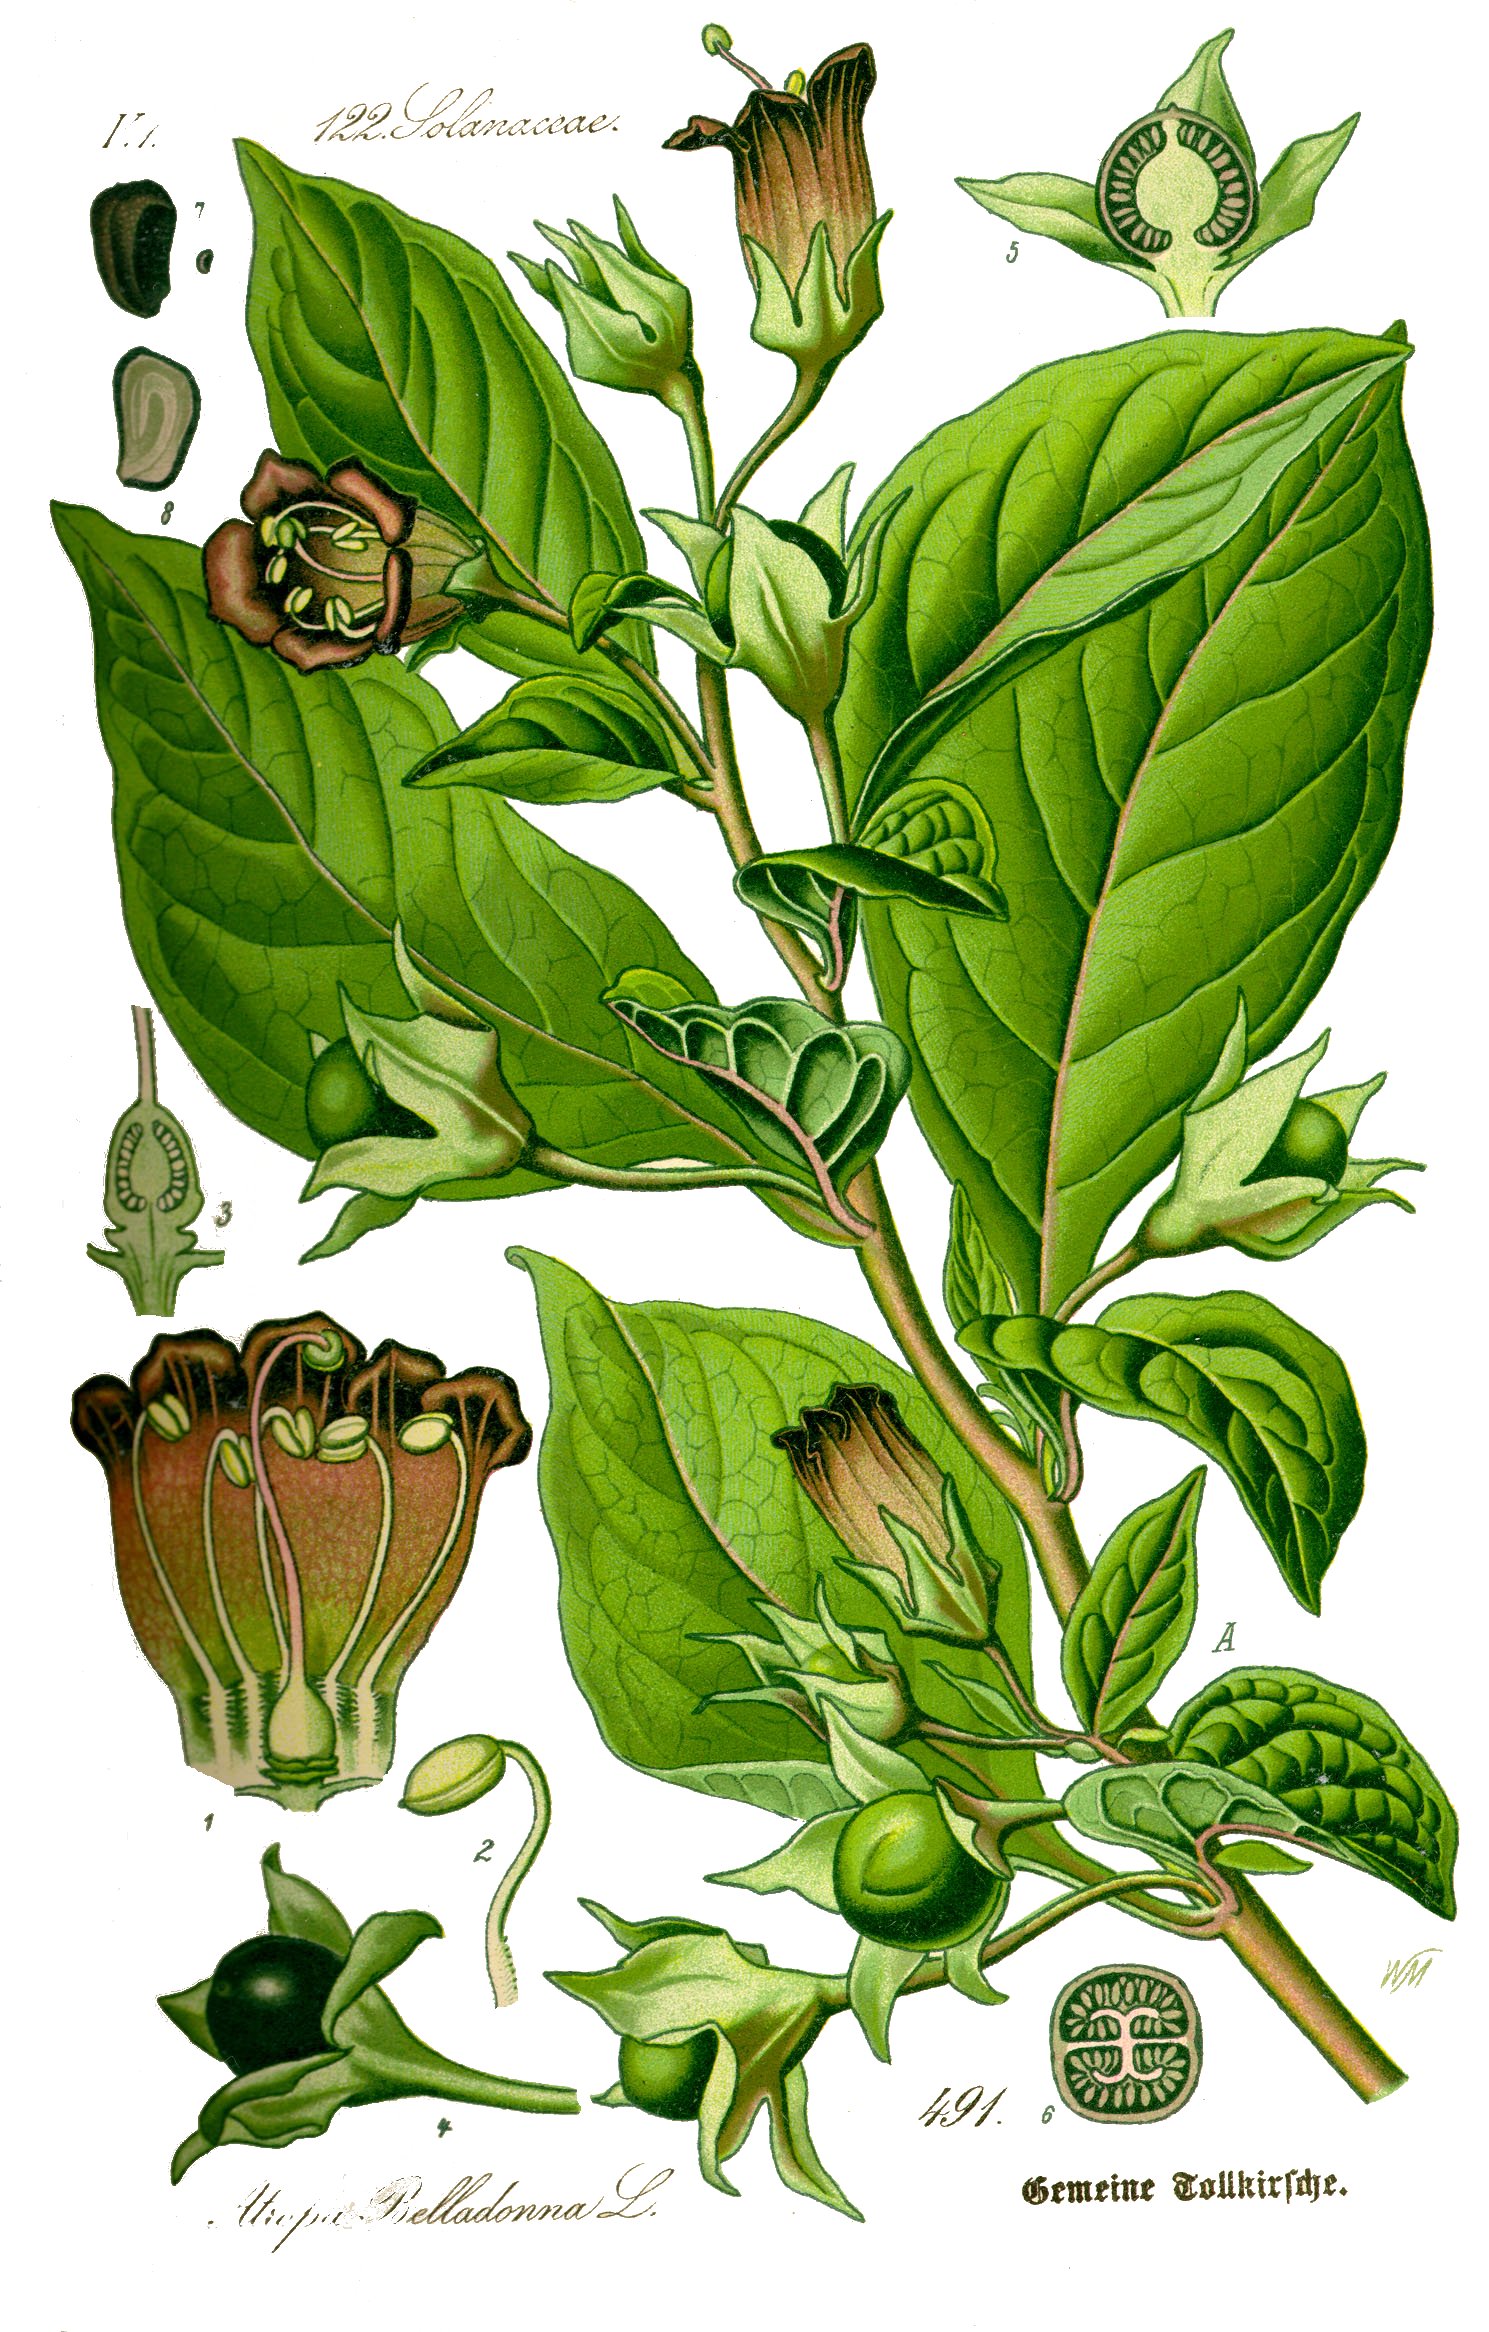 A diagram of Atropa belladonna. Image source: Kilom691, Public domain, via Wikimedia Commons